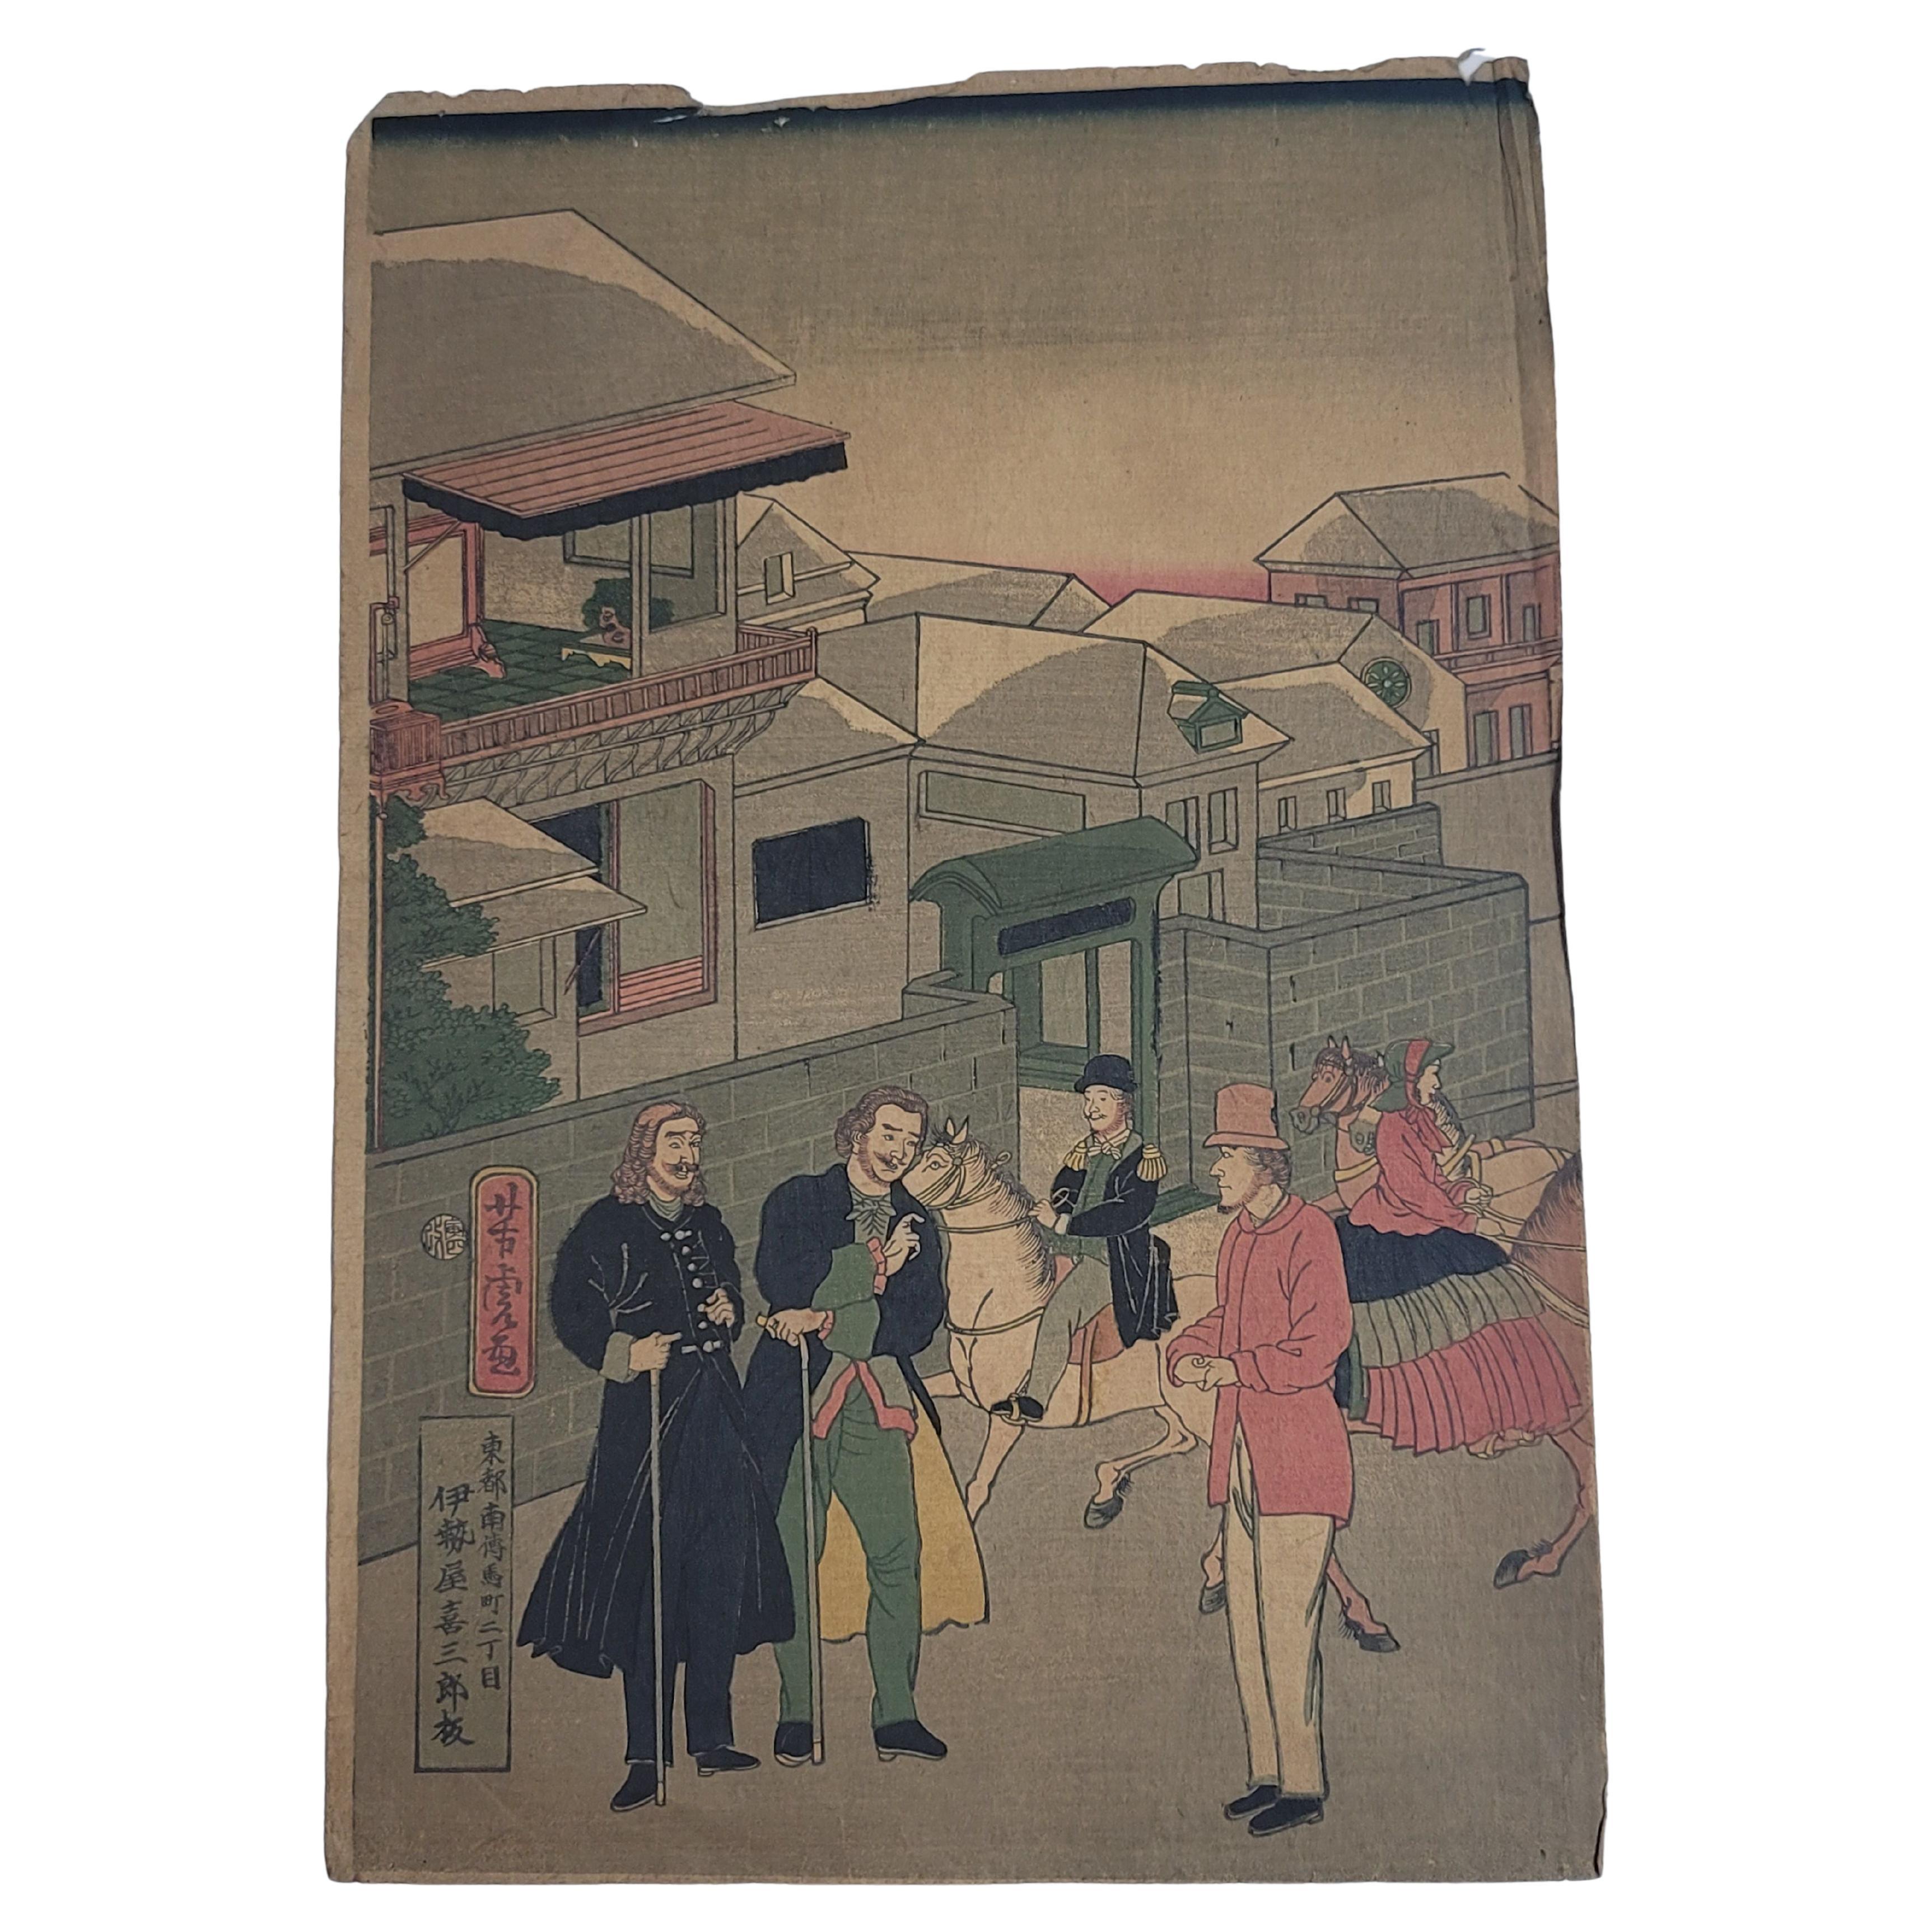 Japanese Woodblock Print by Utagawa Yoshitora 一猛齋芳虎 '1836-1880' For Sale